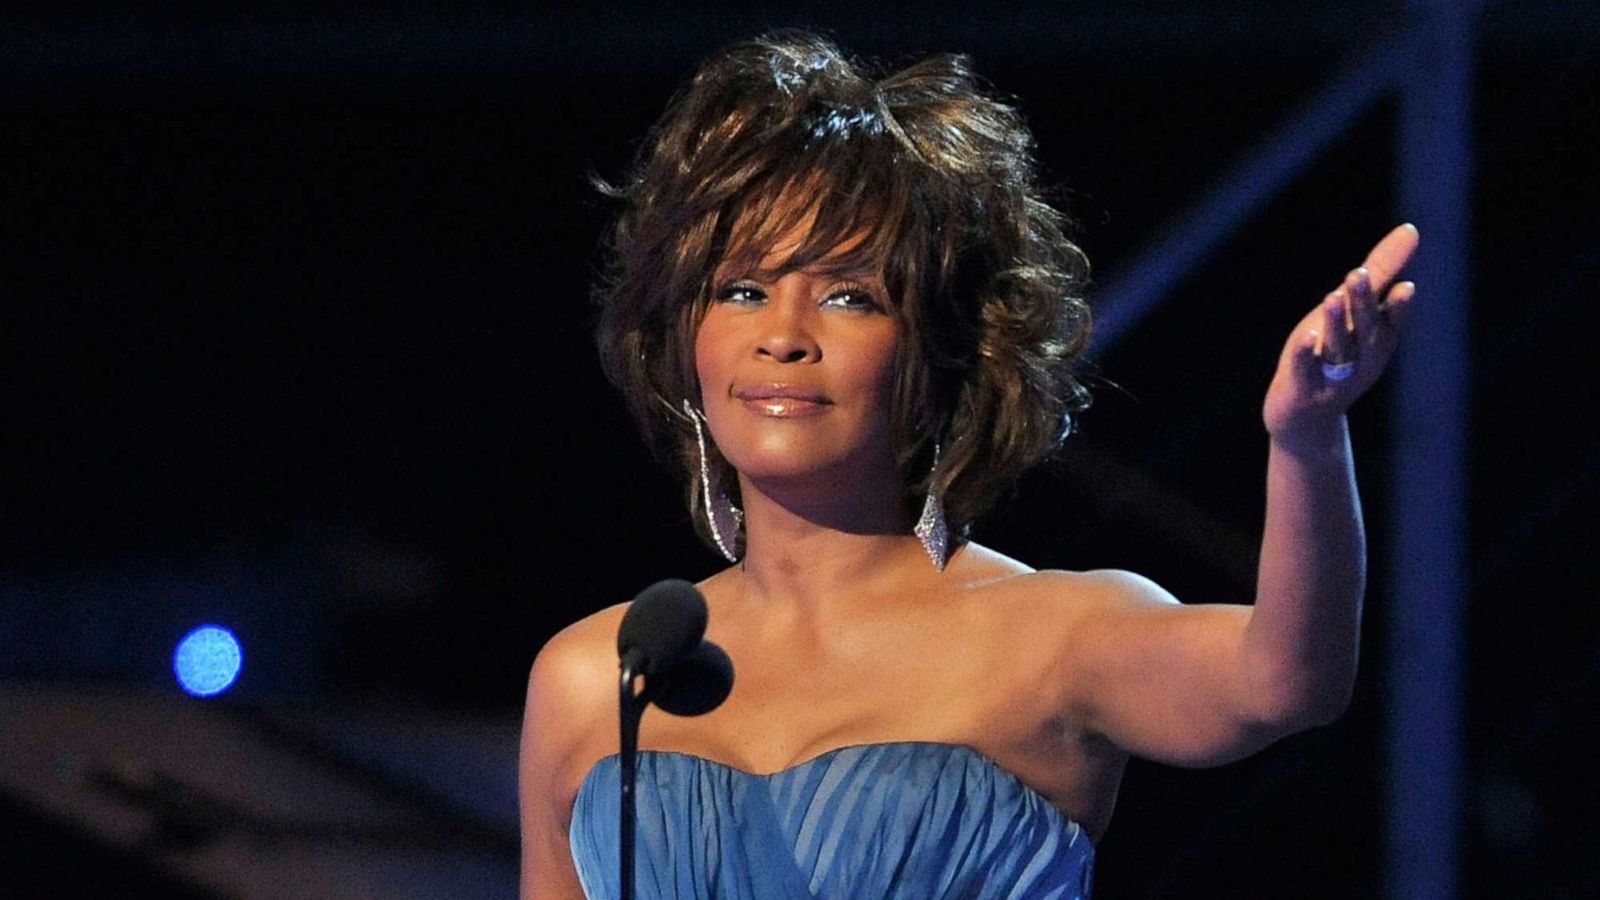 Whitney Houston's 'I Will Always Love You' tops 1 billion views on